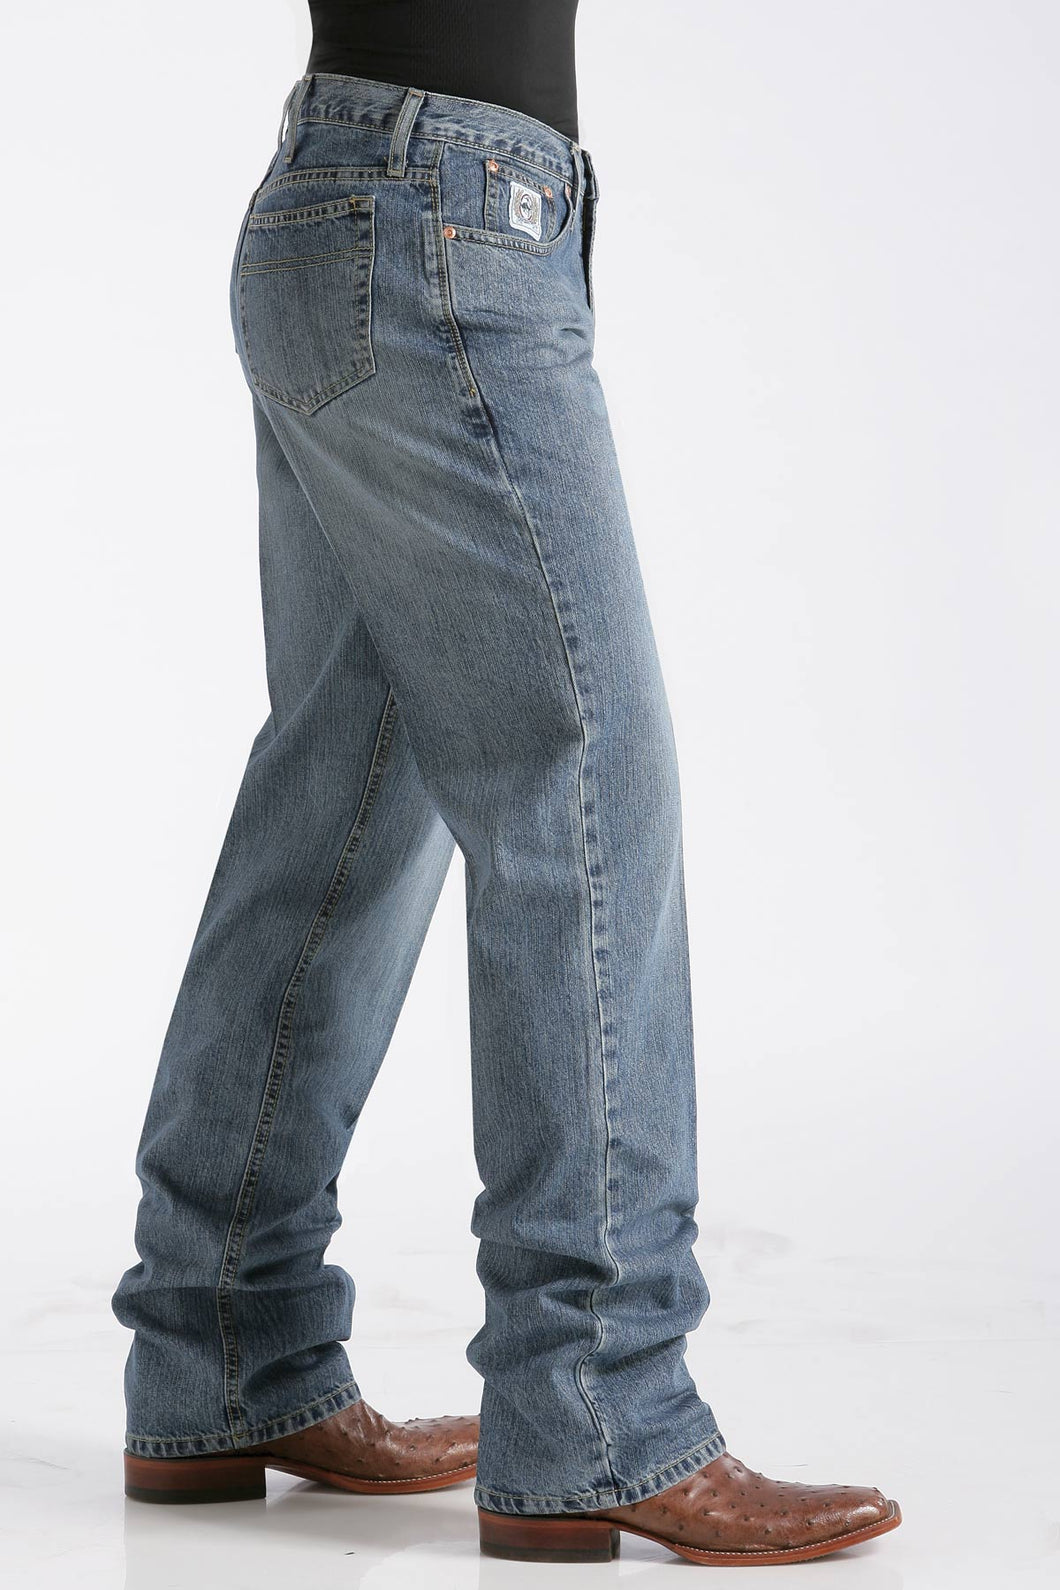 Cinch White Label Men's Jeans